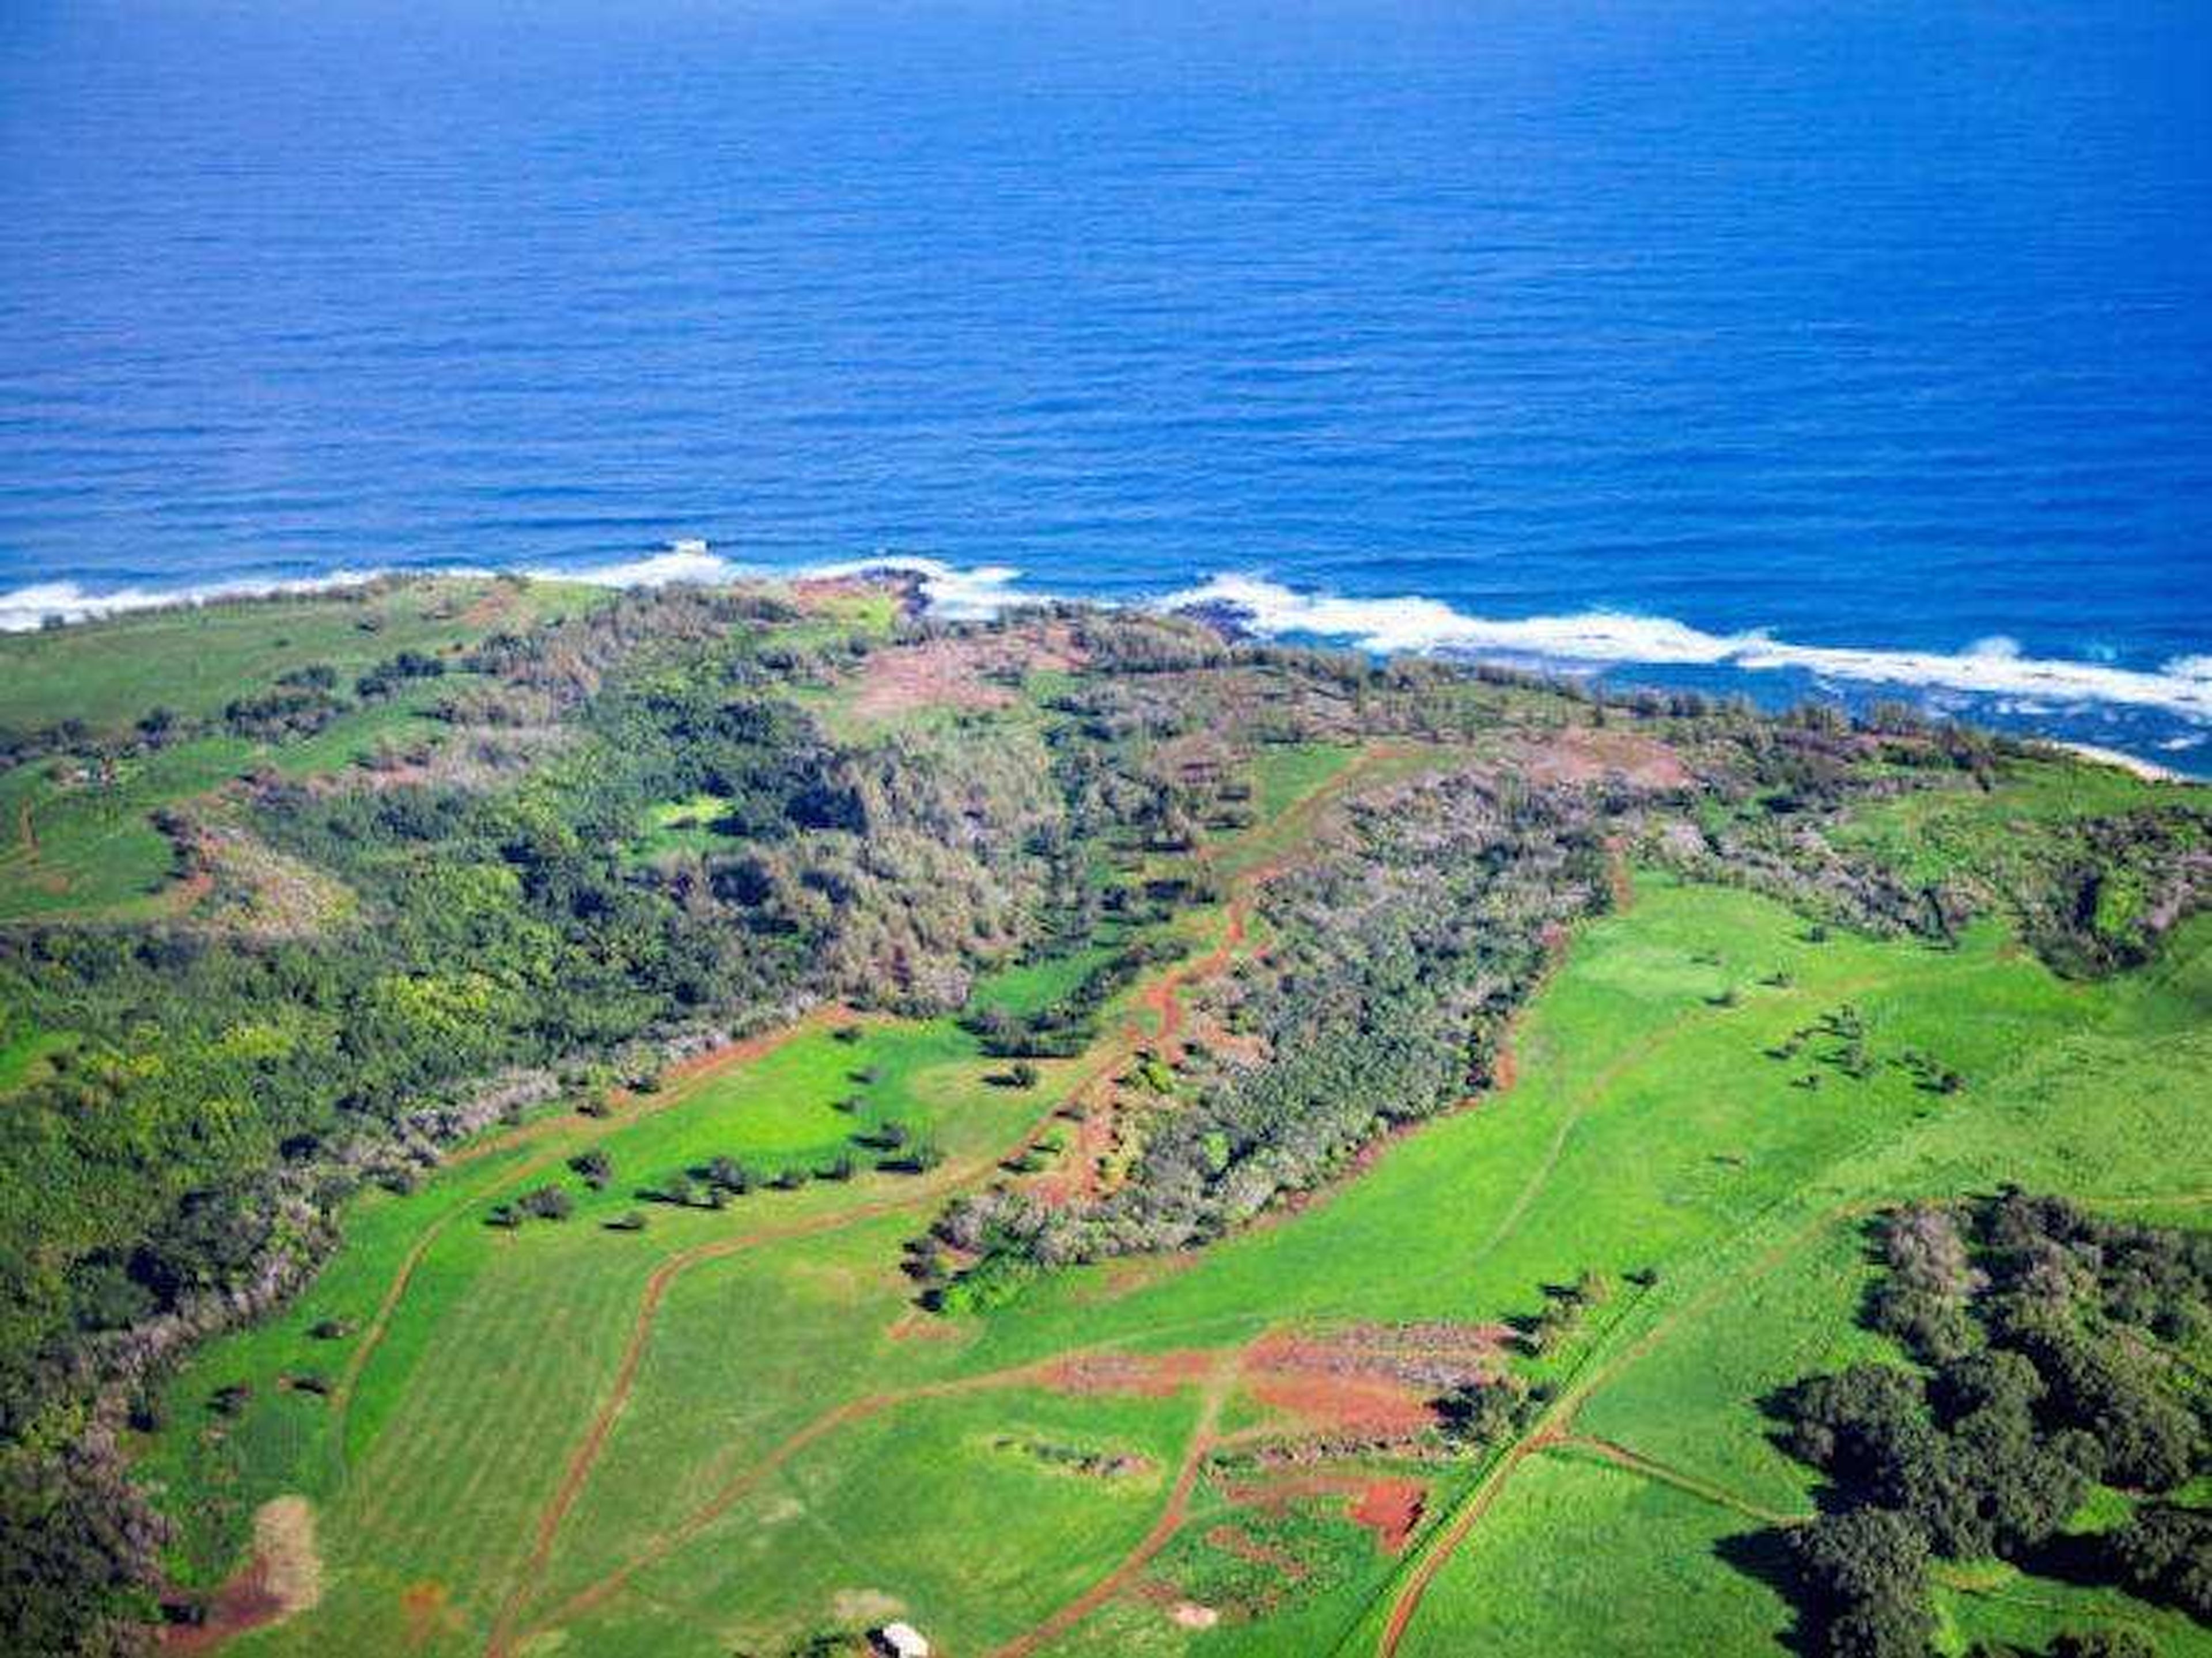 The Kahu’aina Plantation is located on 357 acres of land in Kilauea, Hawaii.